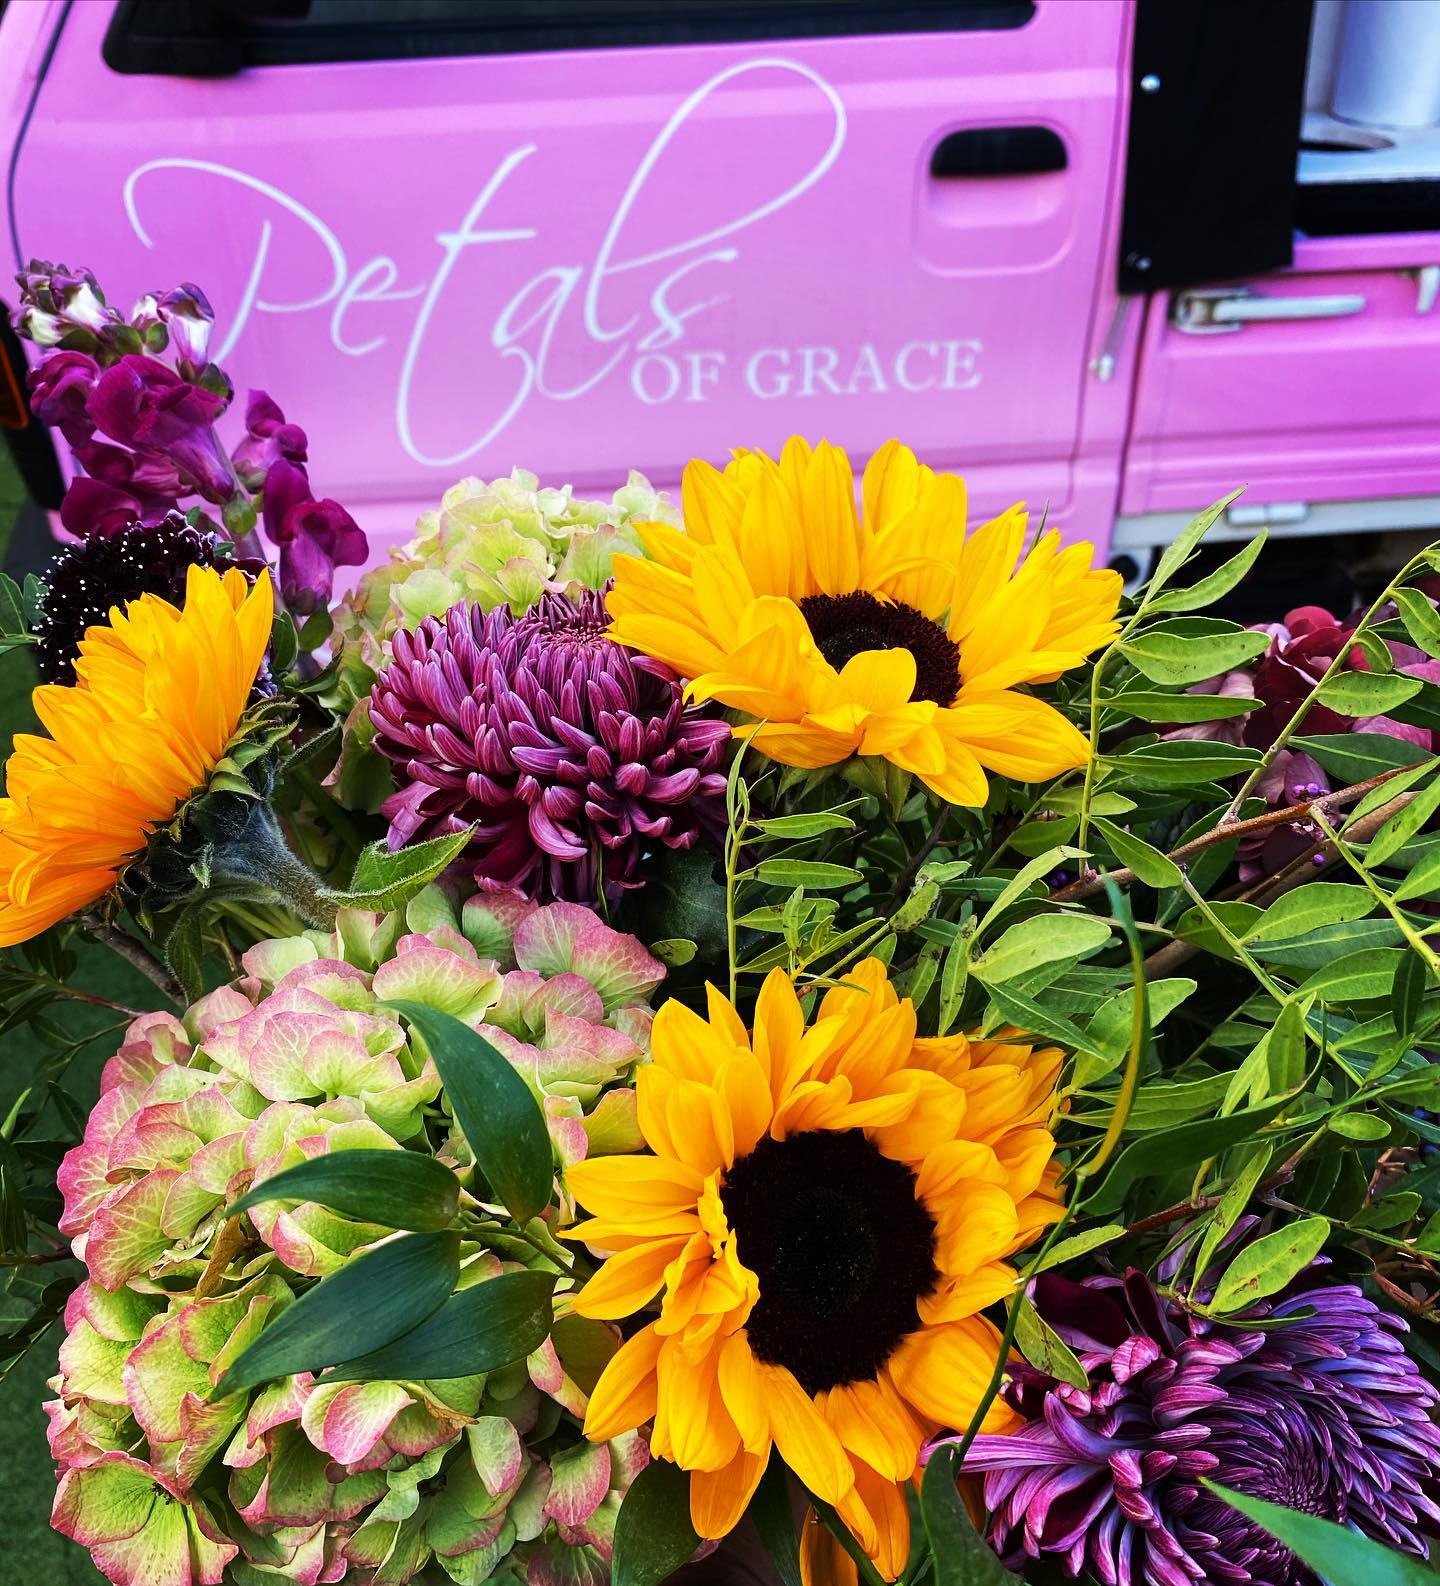 Petals of Grace - Leeds floristry